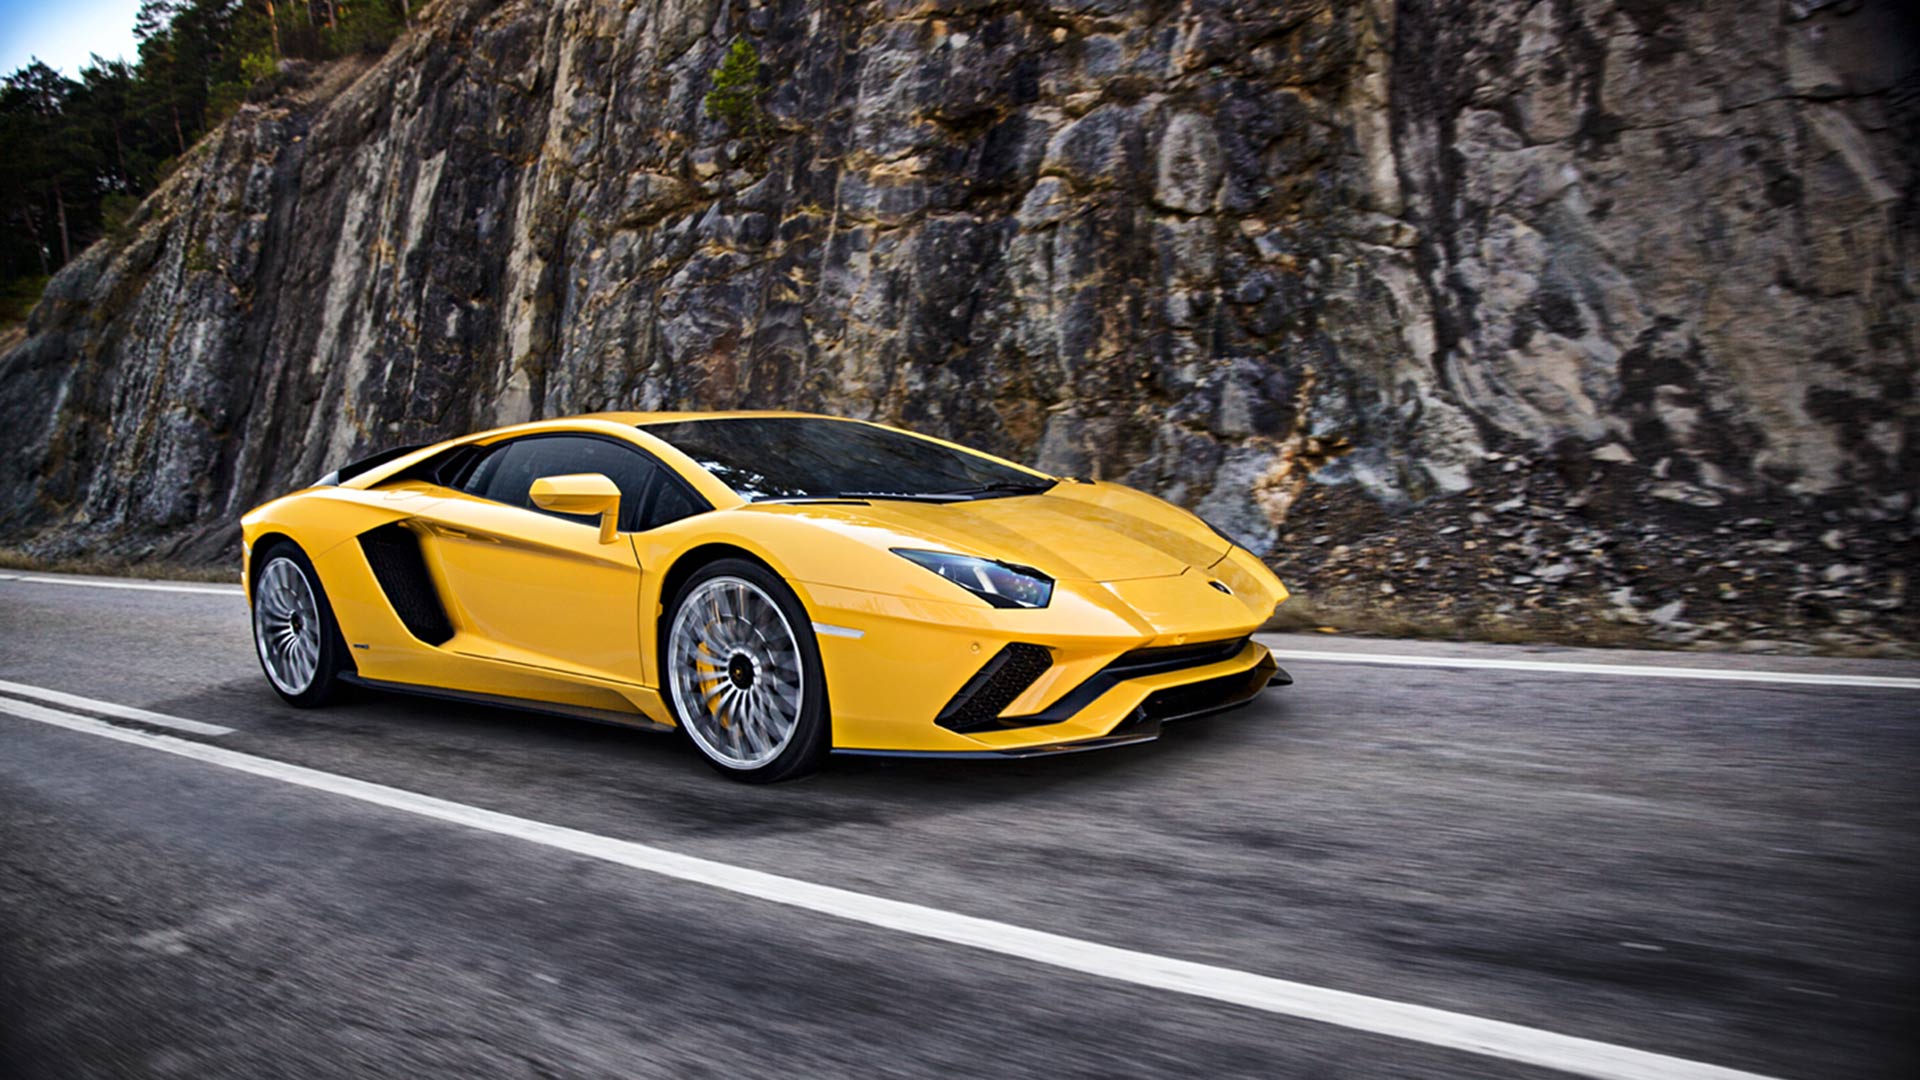 Wallpaper Lamborghini Car Models On Latest Model High Quality Of